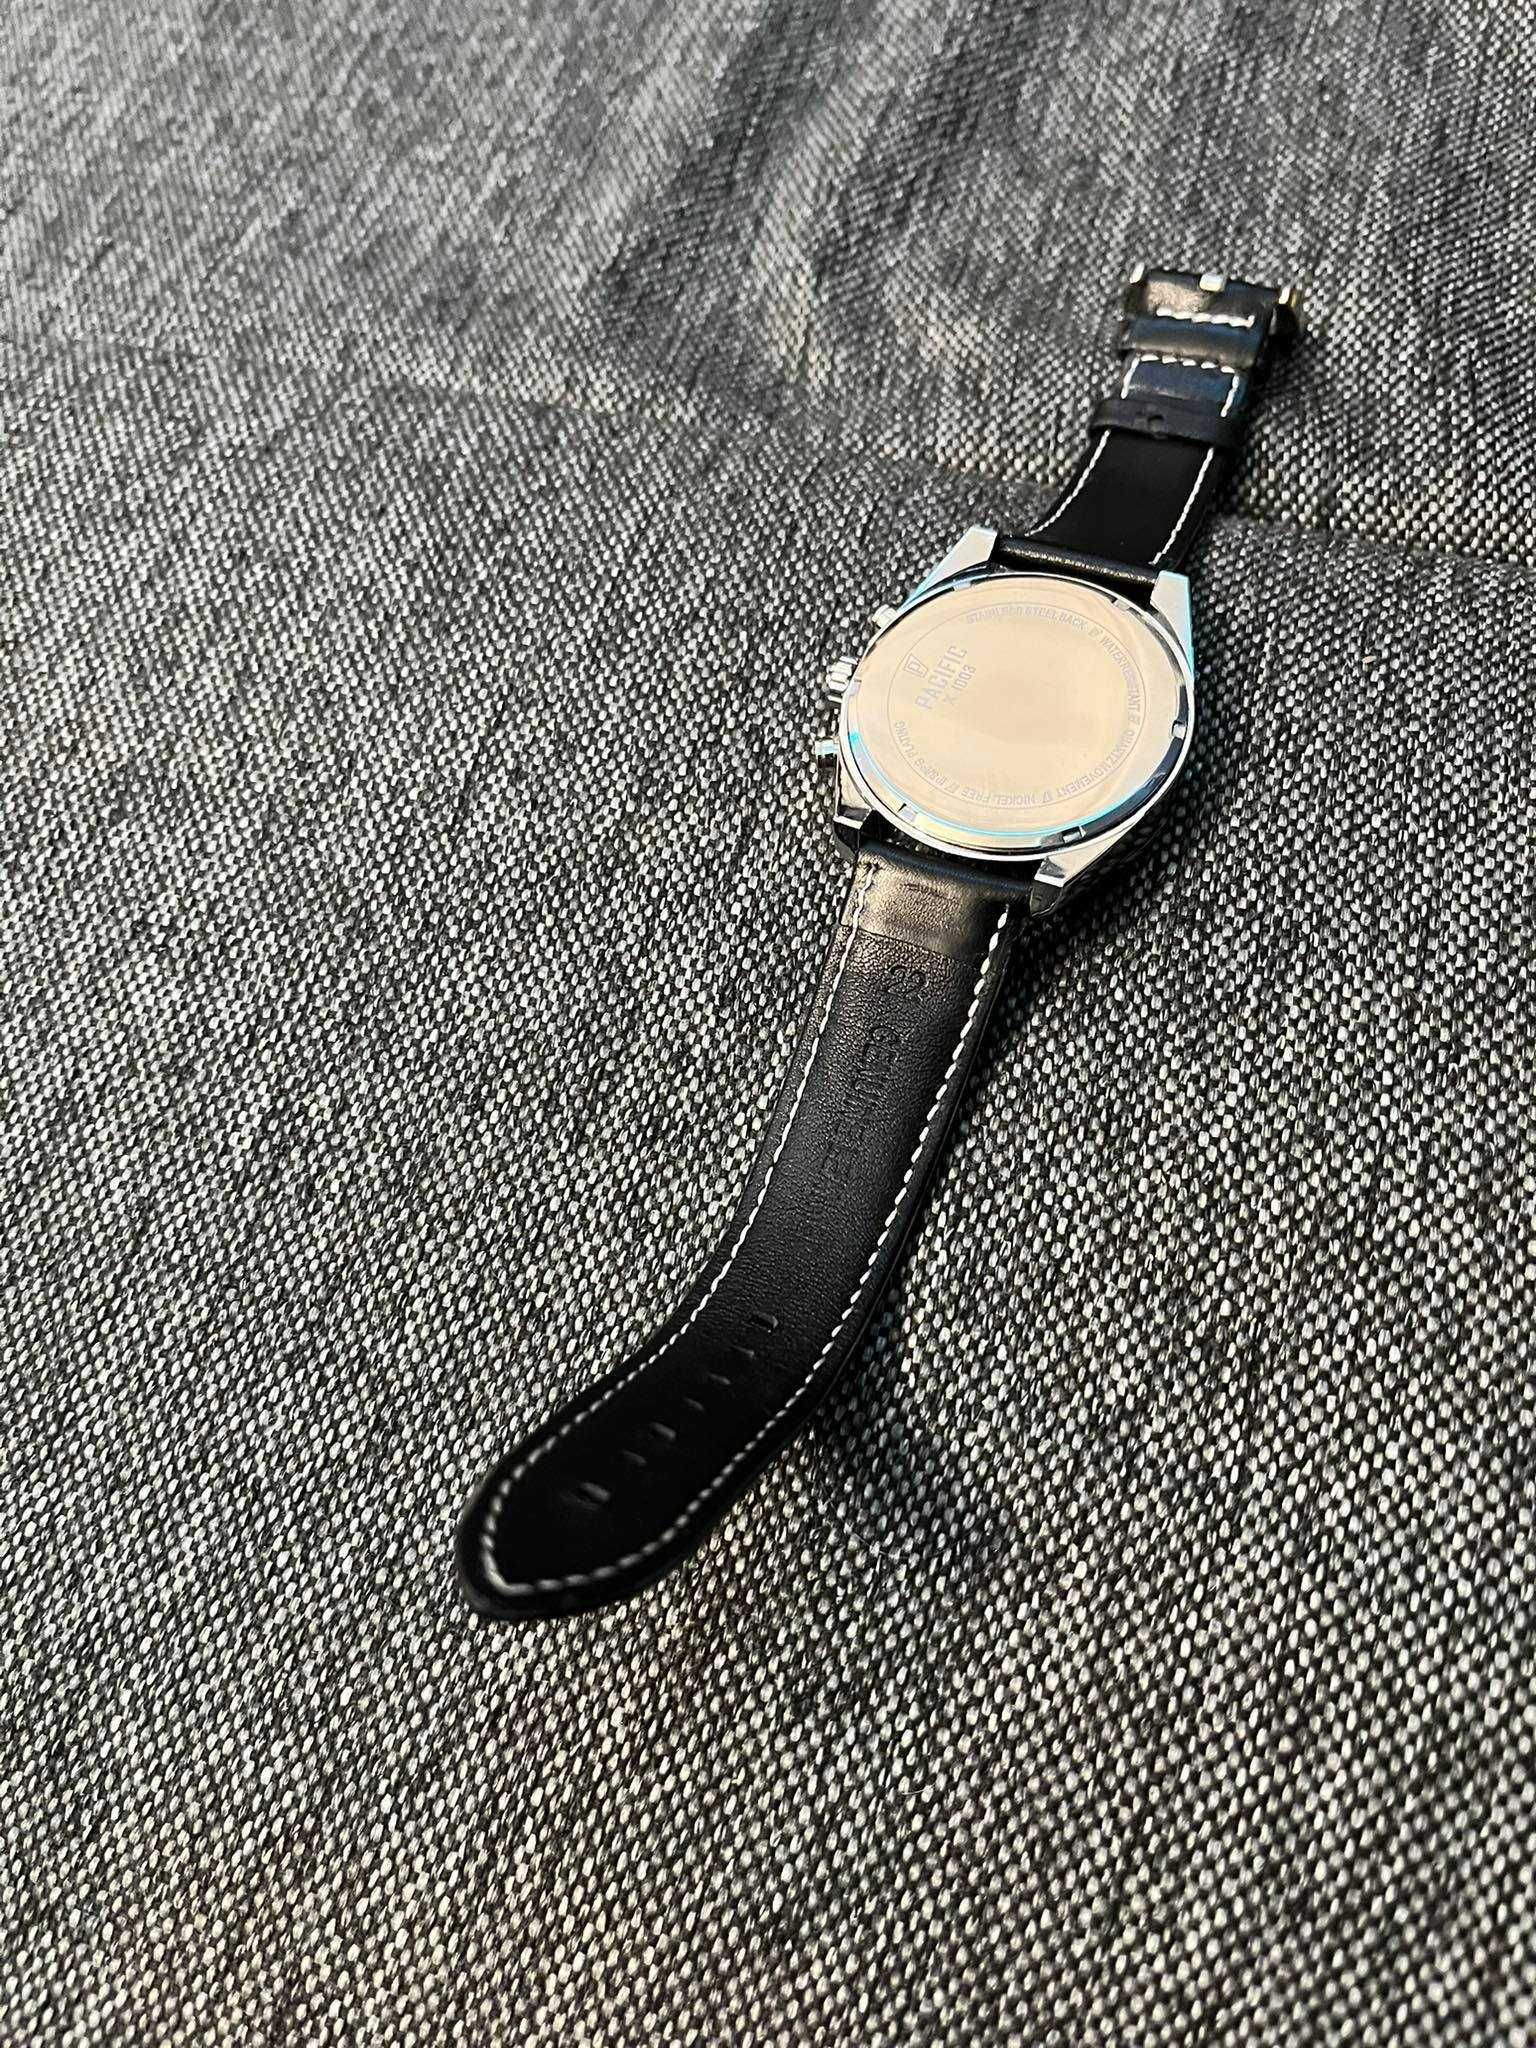 Zegarek Pacific x1003 Kolekcja premium